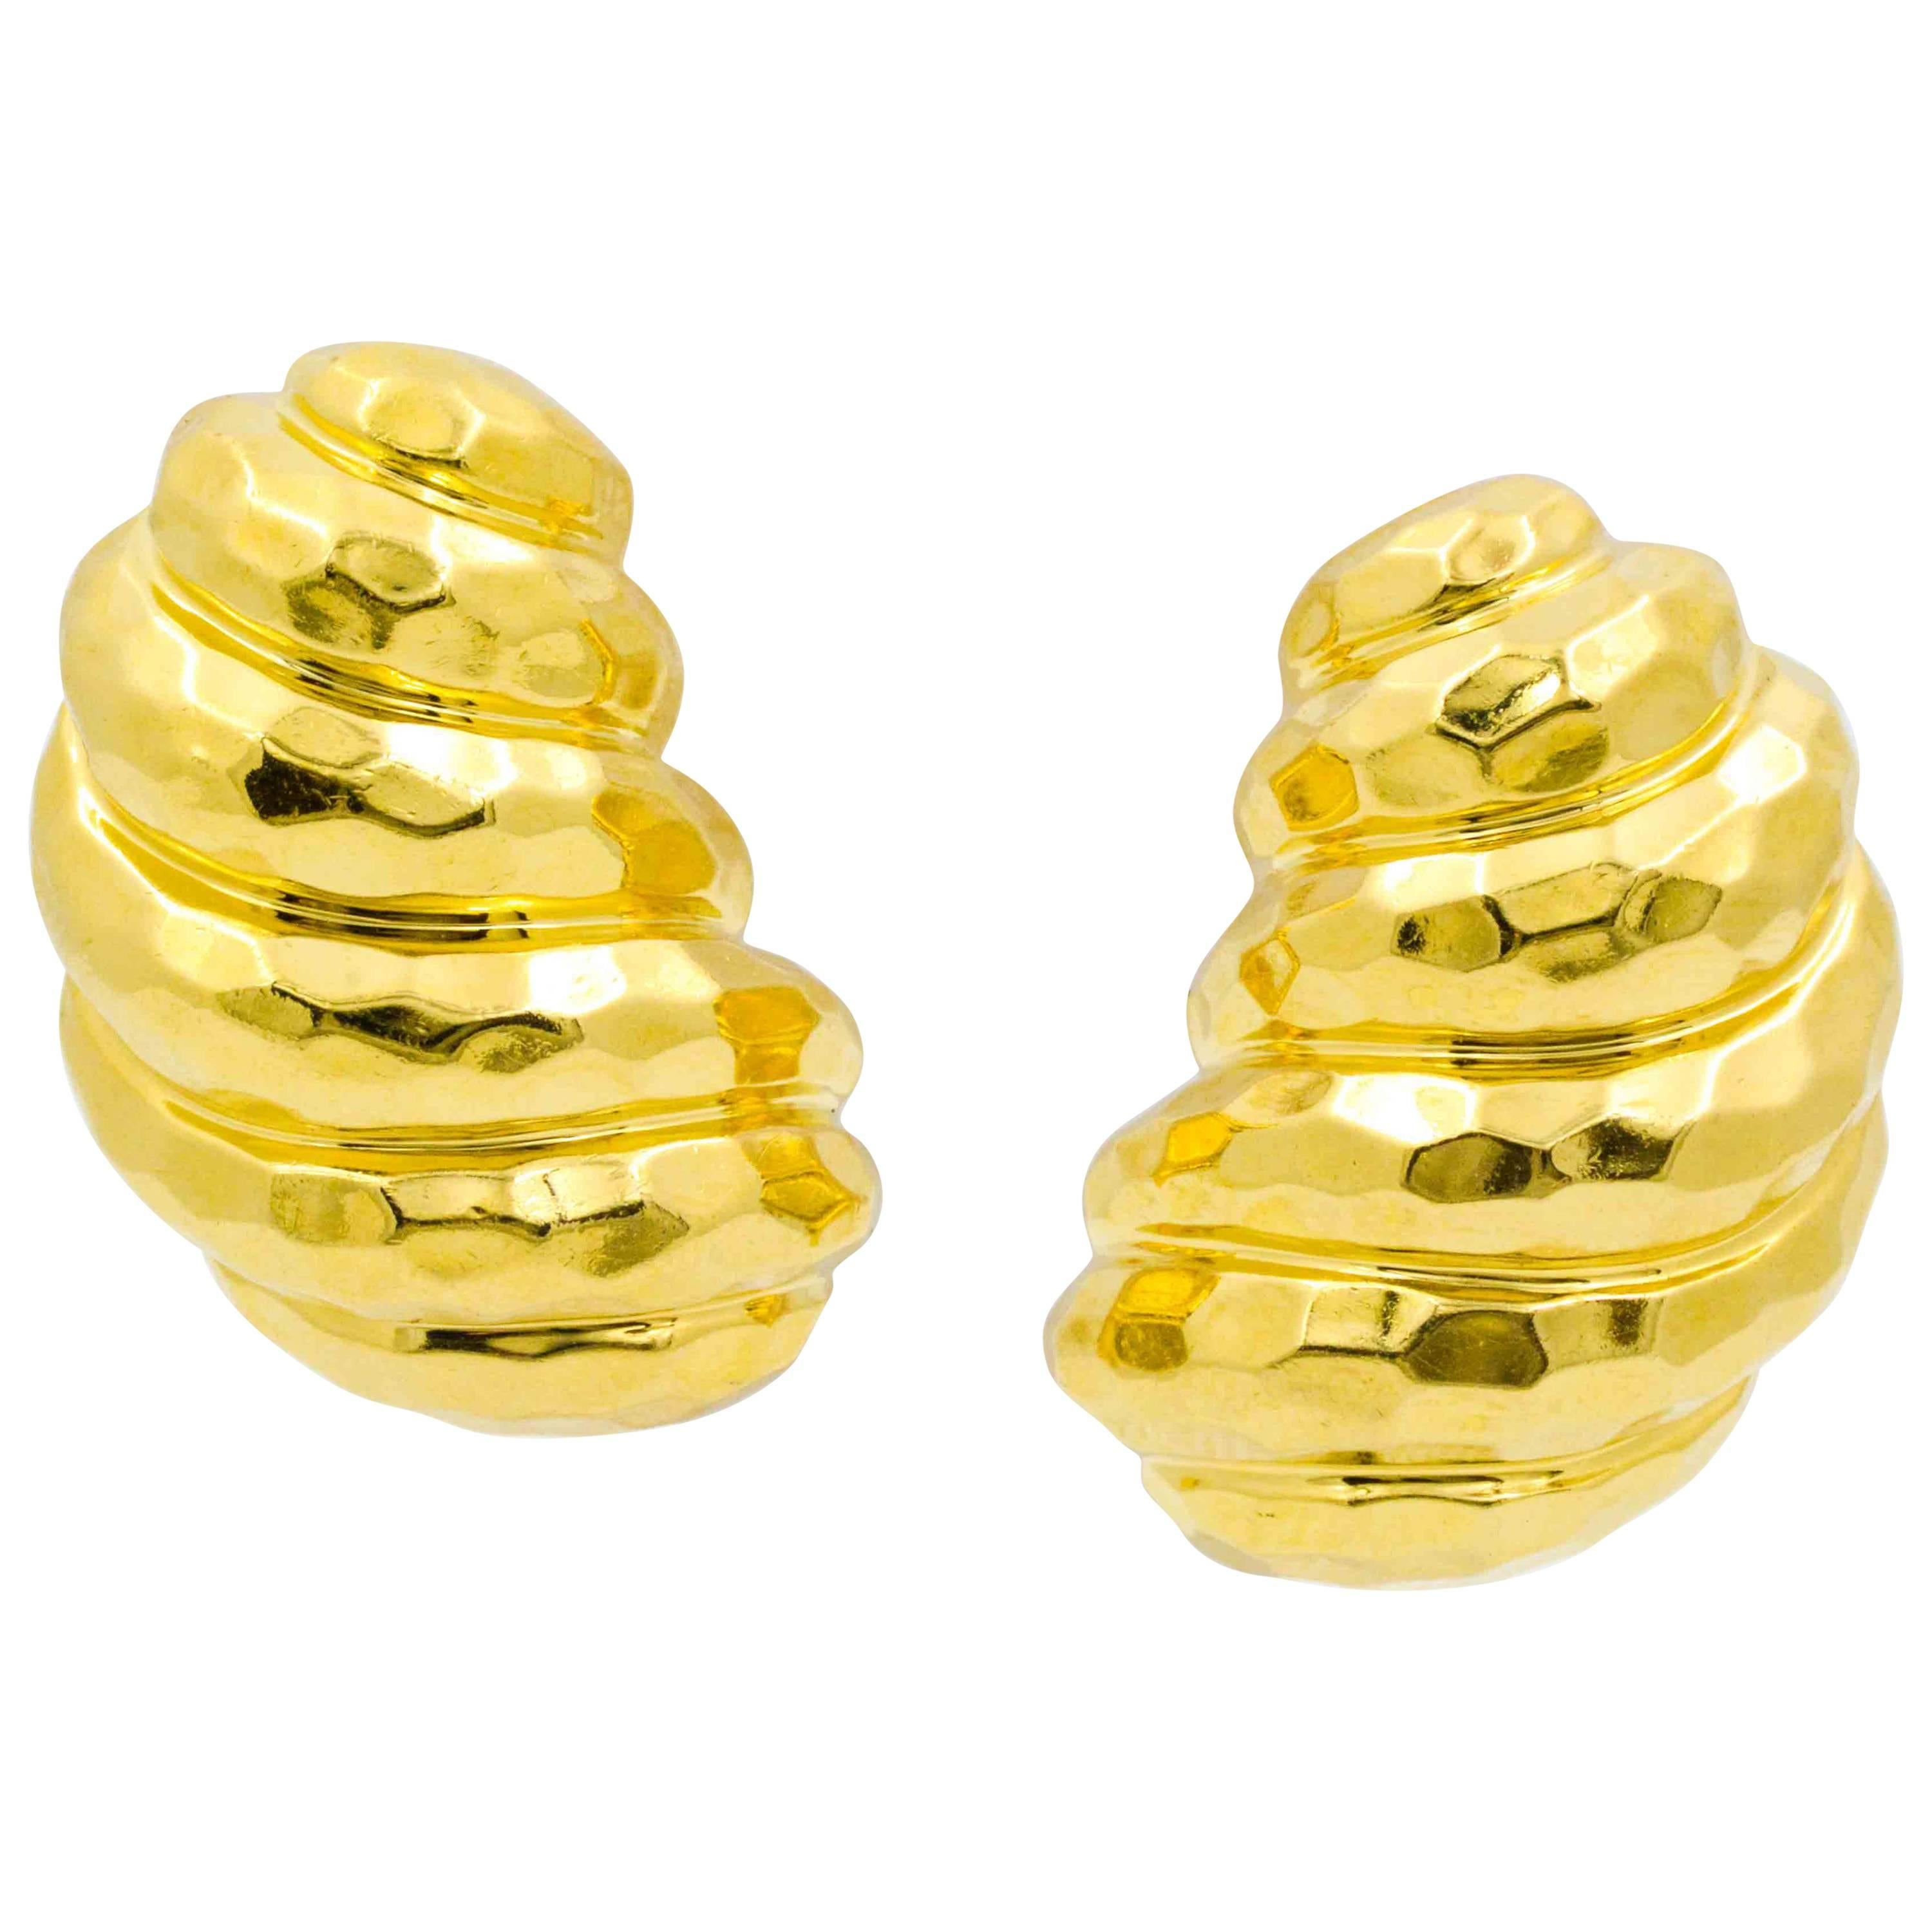 18 Karat Yellow Gold Hoop Earrings